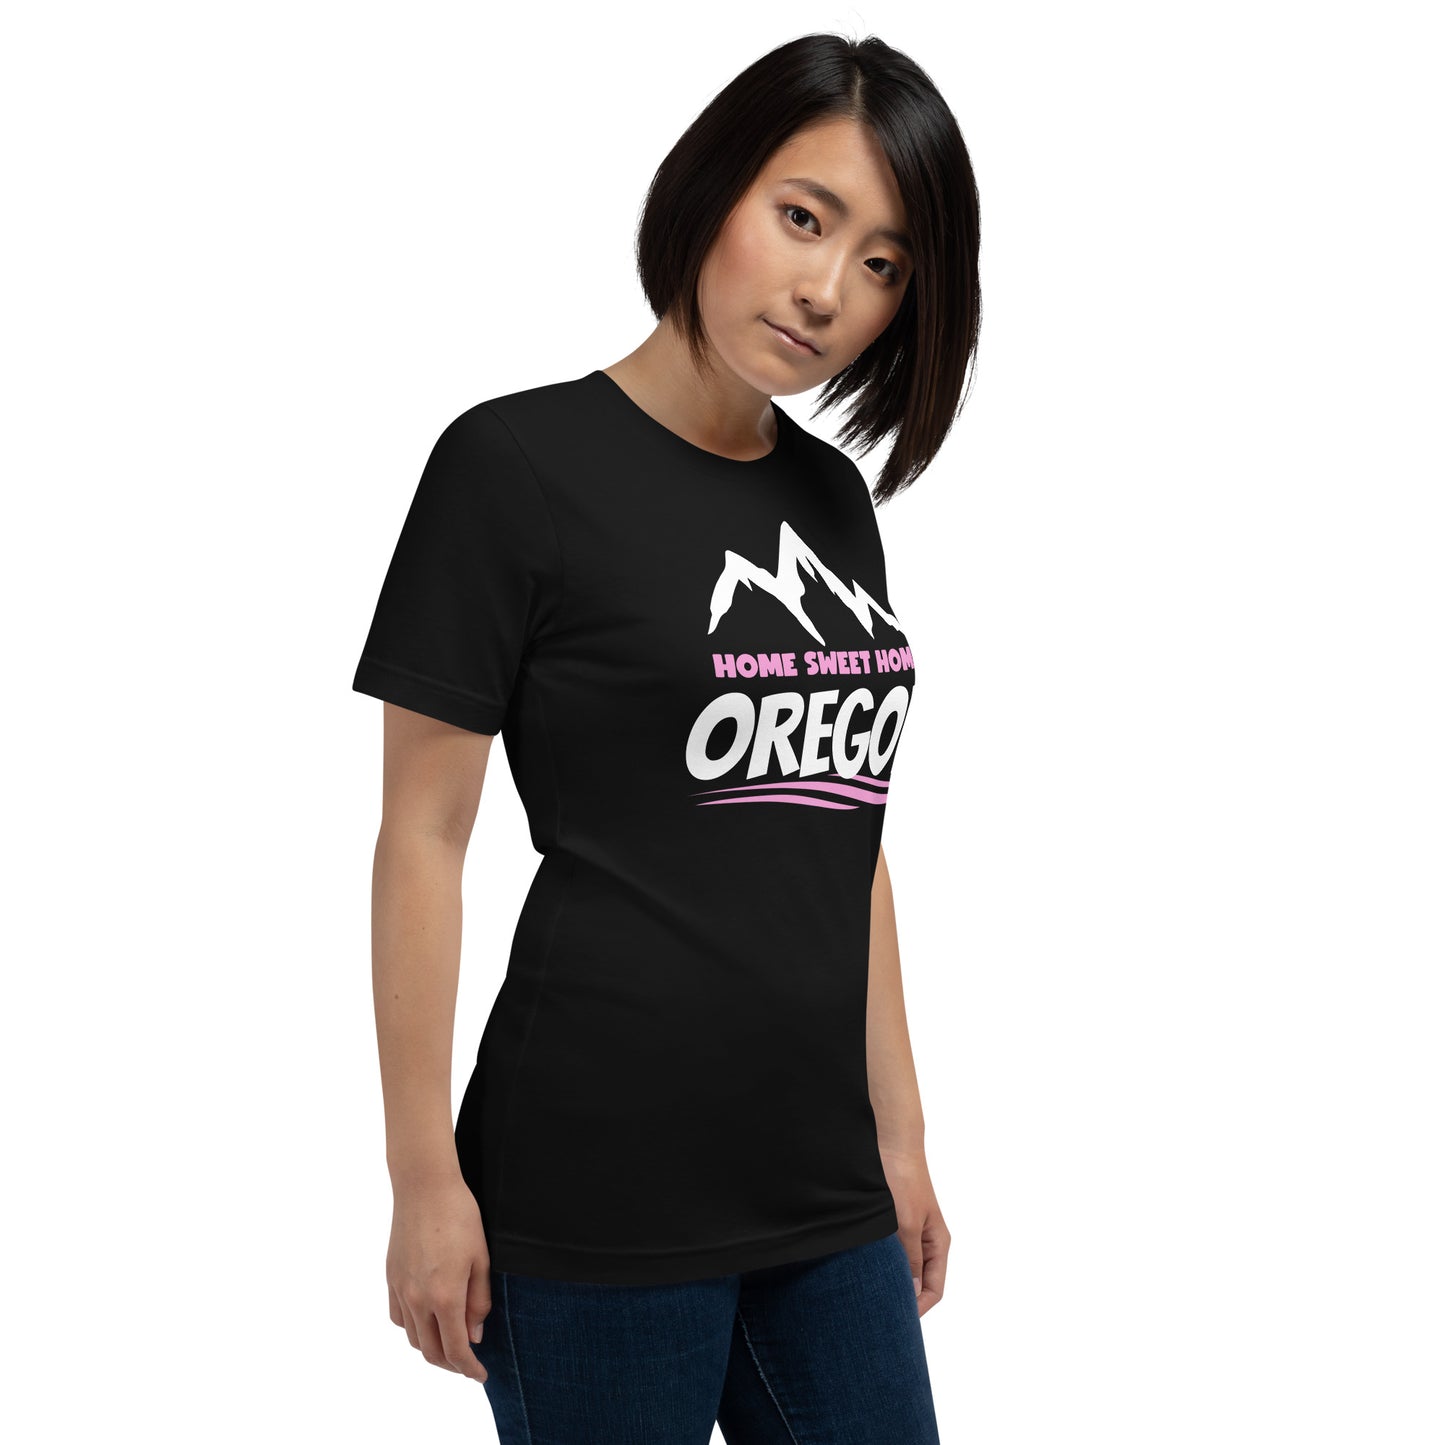 Home Sweet Home Oregon/Pink - Unisex t-shirt